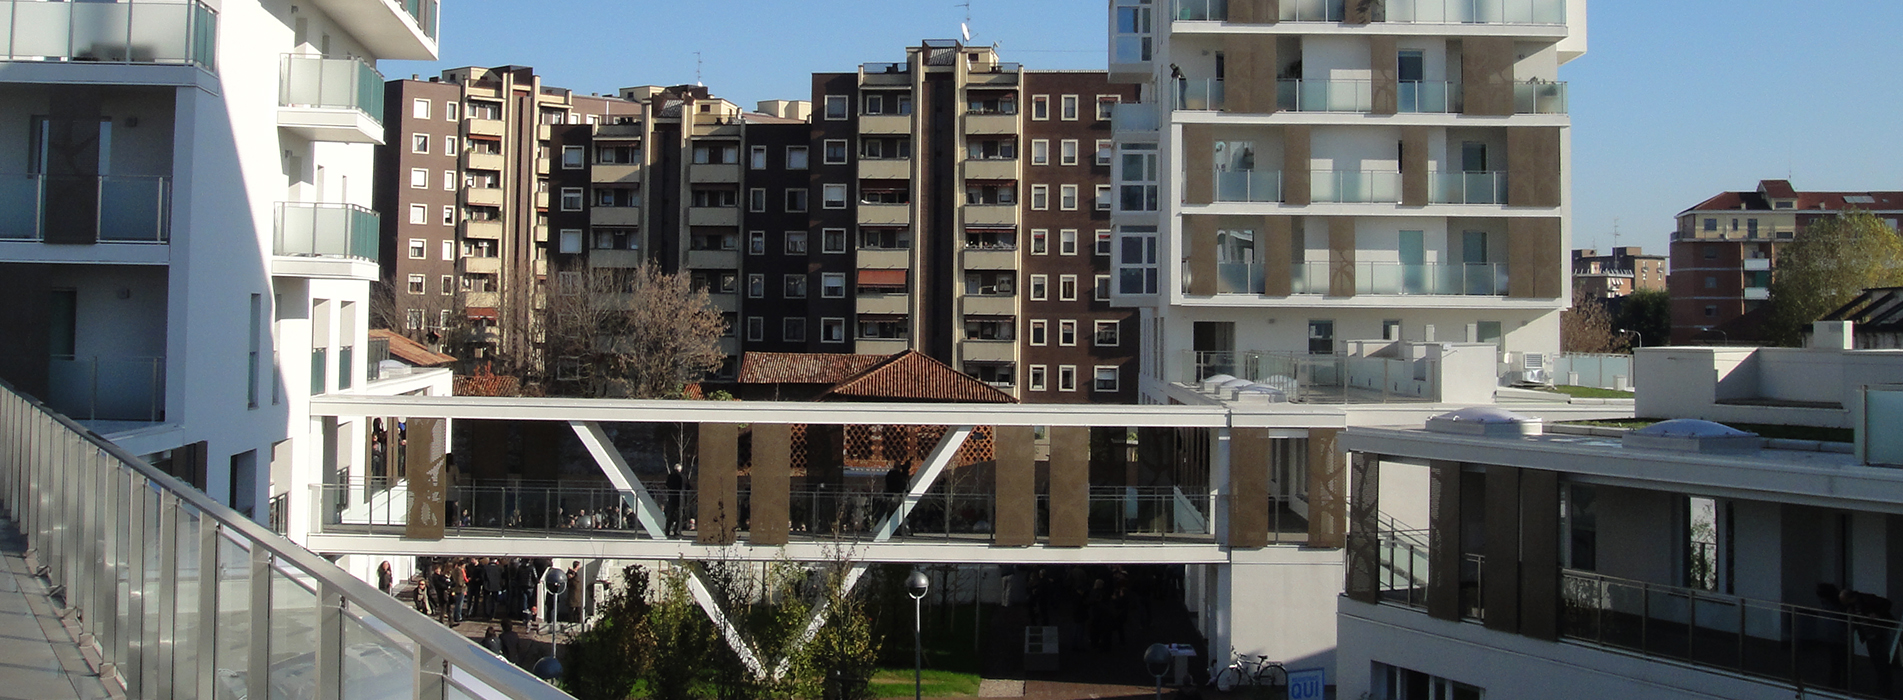 Residential building in social housing in Via Cenni